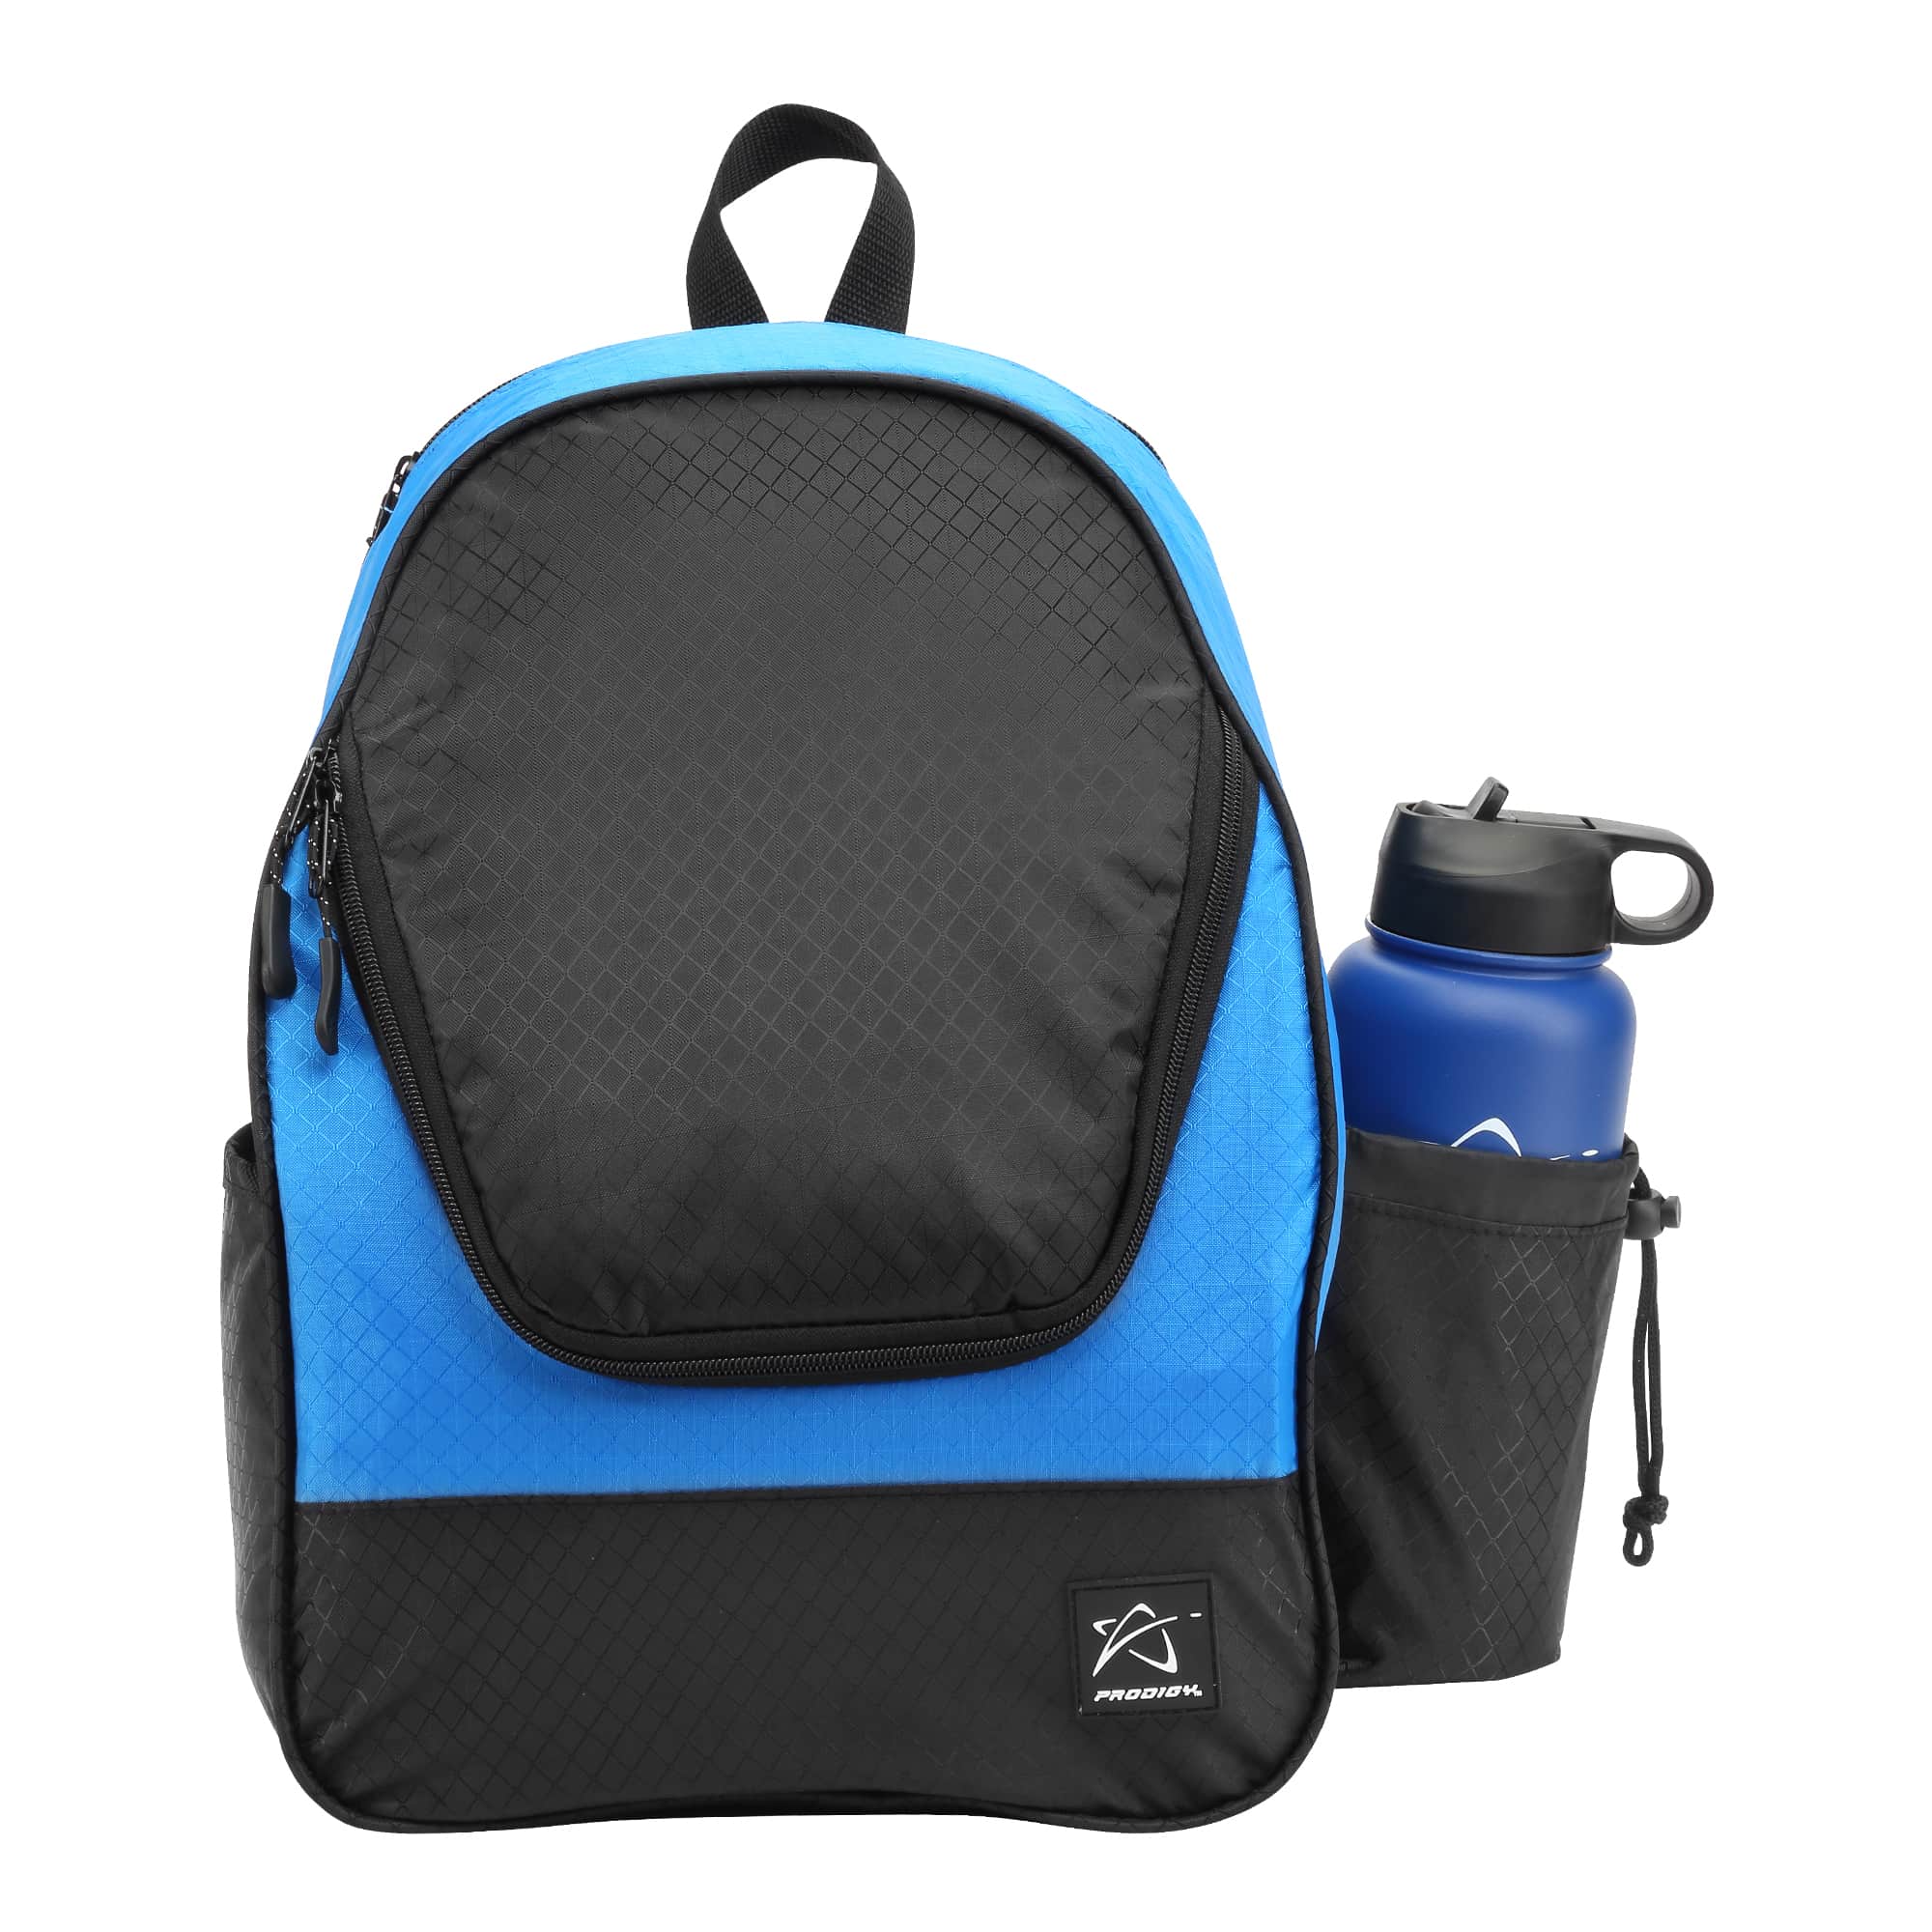 Prodigy BP-4 Backpack Disc Golf Bag